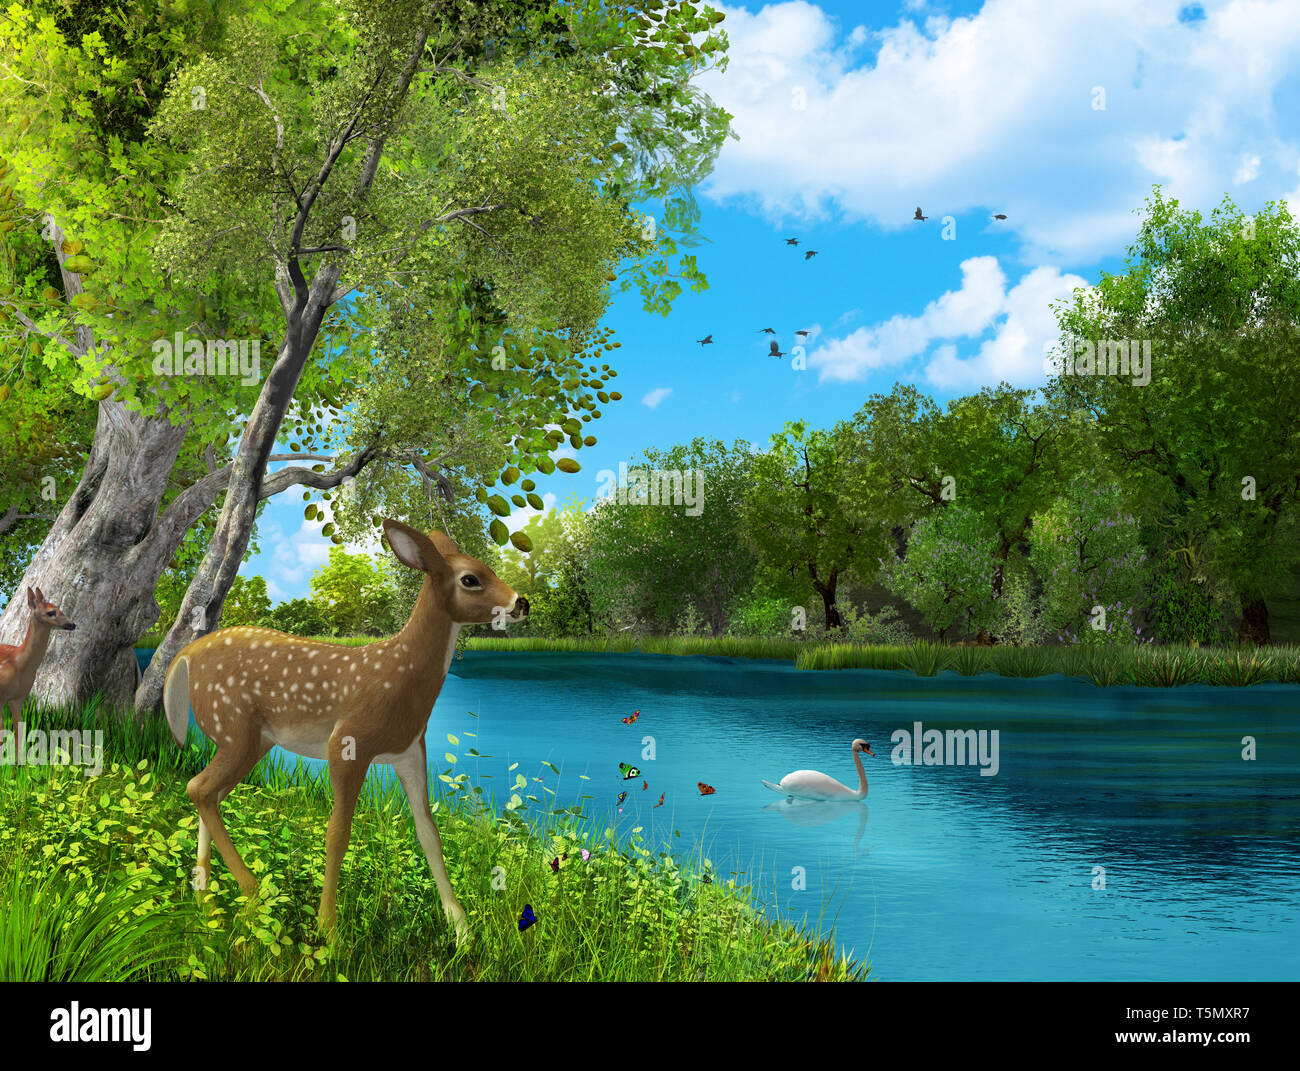 https://c8.alamy.com/comp/T5MXR7/beautiful-untouched-animal-nature-paradies-peaceful-garden-of-eden-3d-render-T5MXR7.jpg